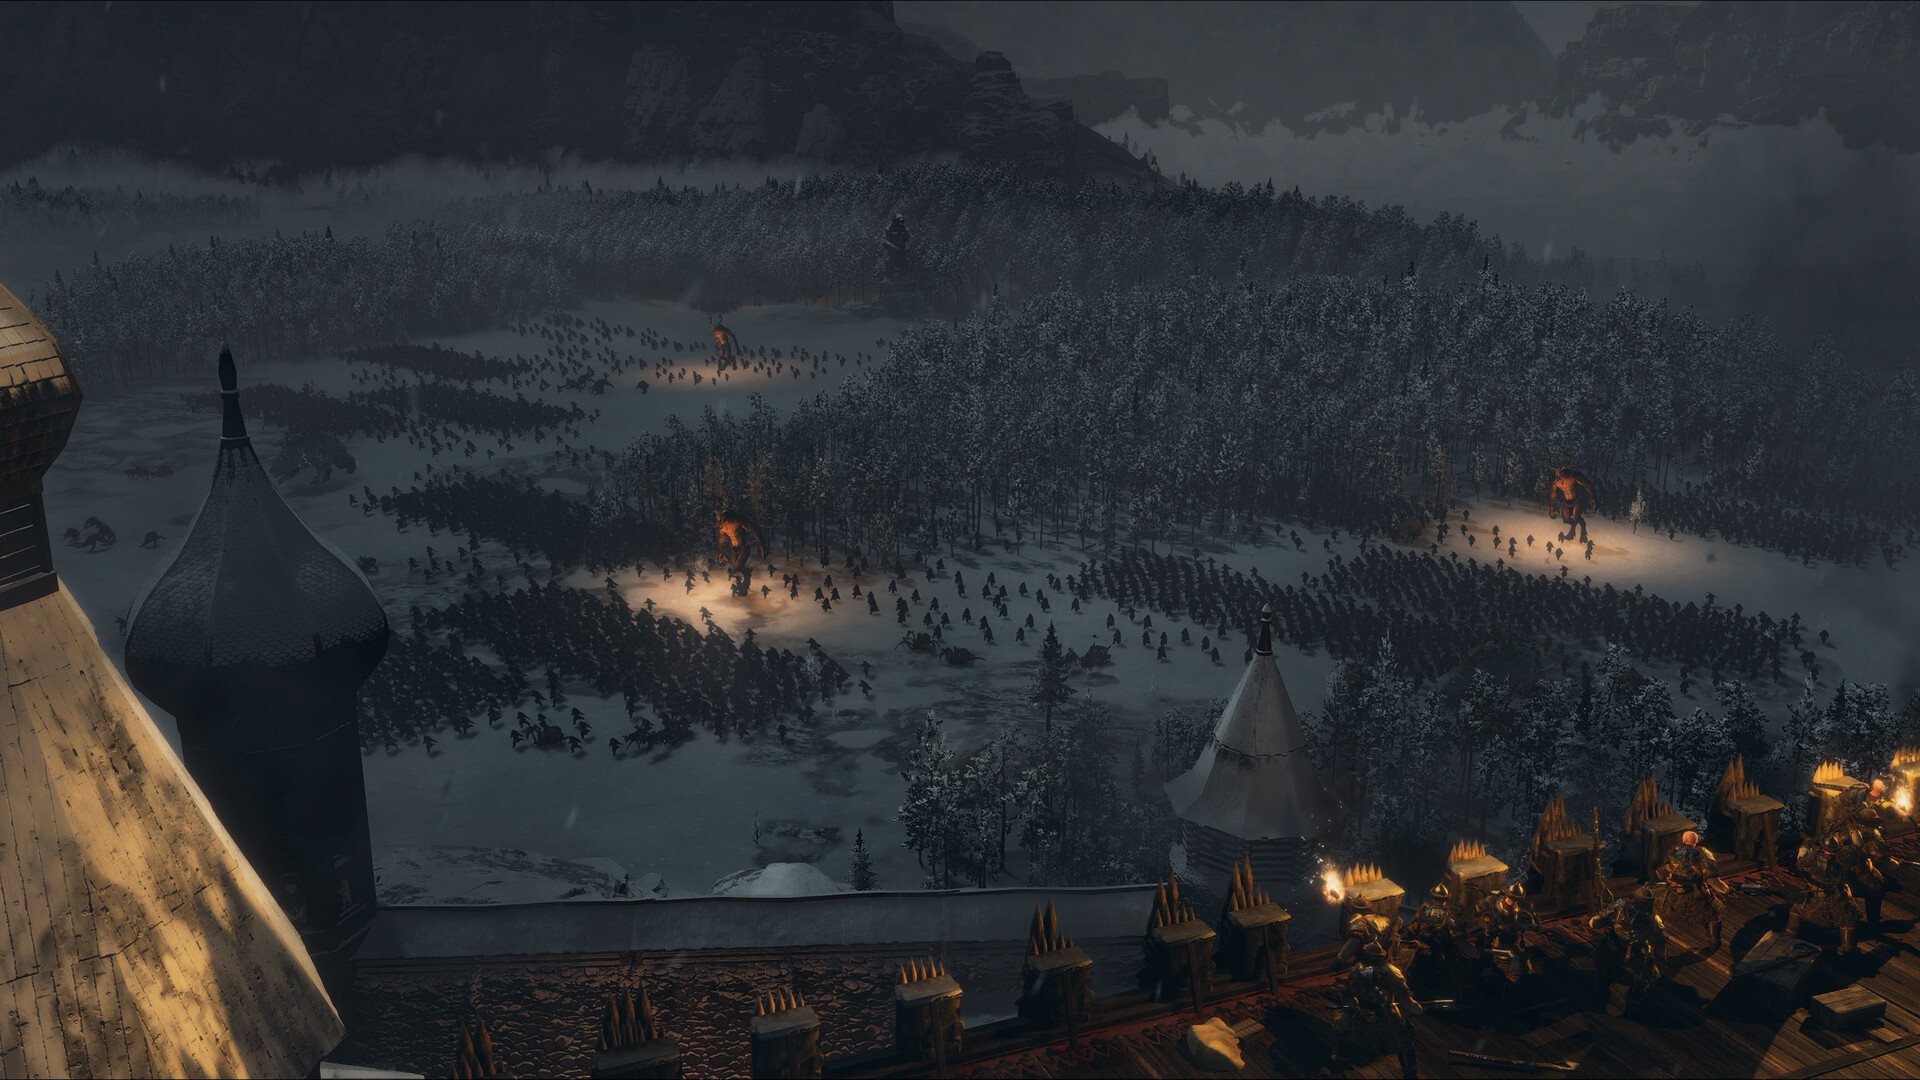 Total War: WARHAMMER III - Shadows Of Change DLC RoW Steam CD Key